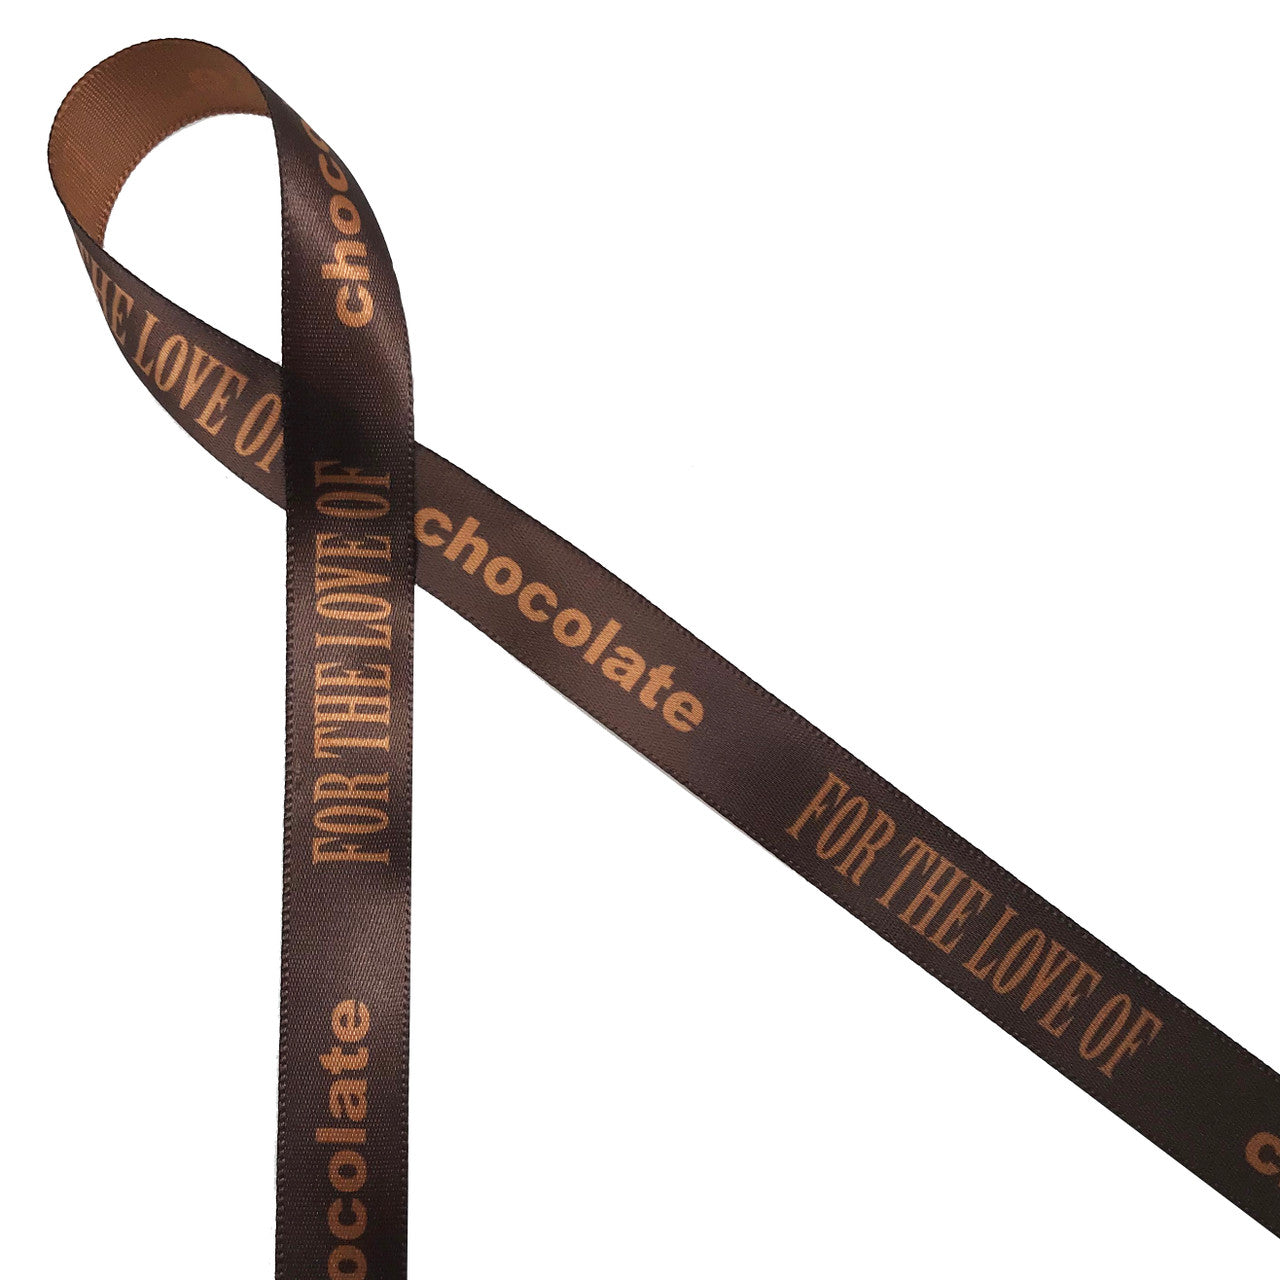 Personalized Ribbon  Shop Custom Ribbons for Weddings, Parties & Holidays  at Name Maker